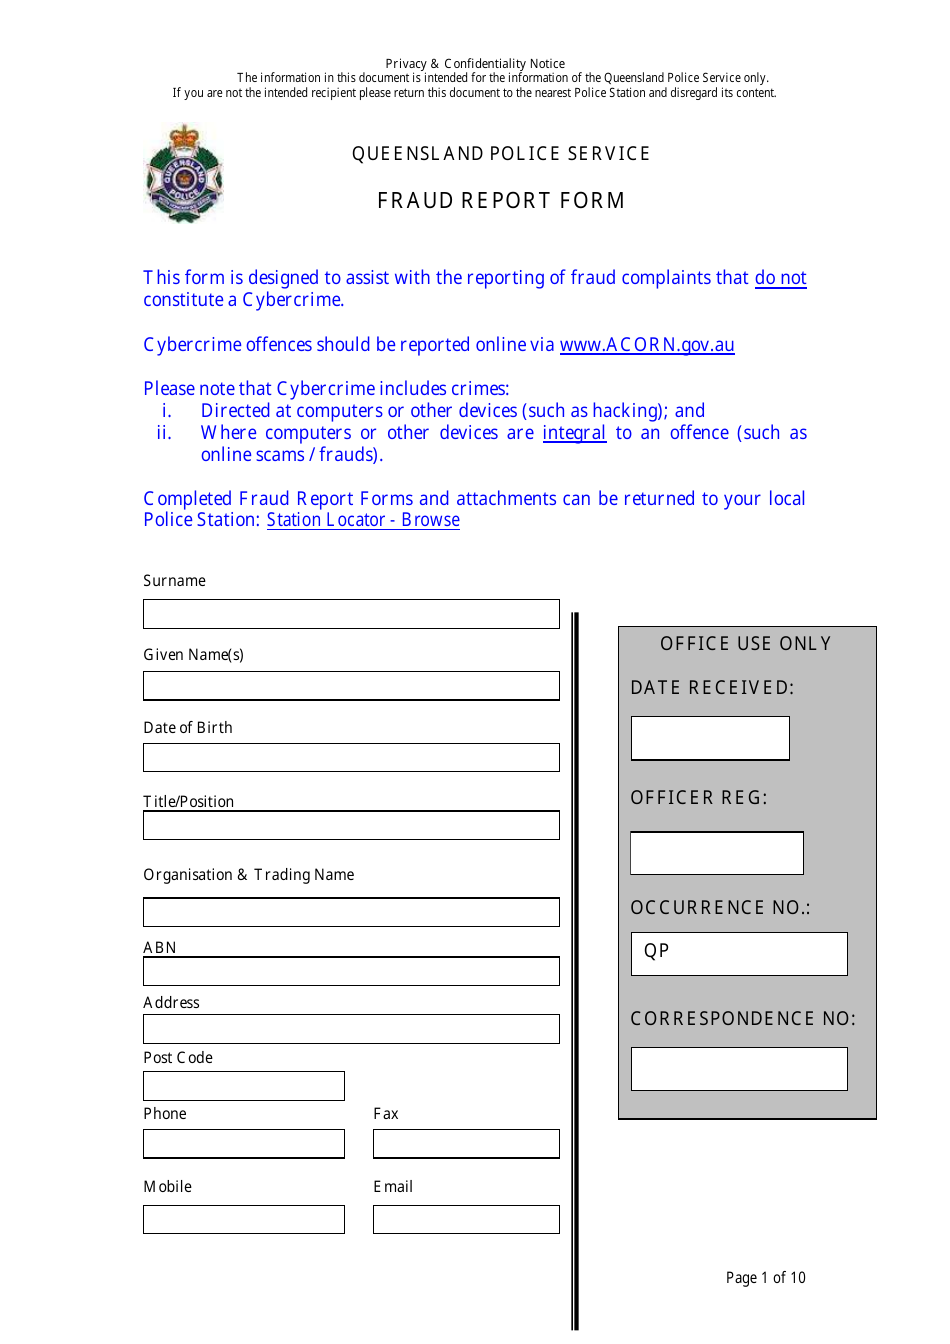 Fraud Report Form - Queensland, Australia, Page 1